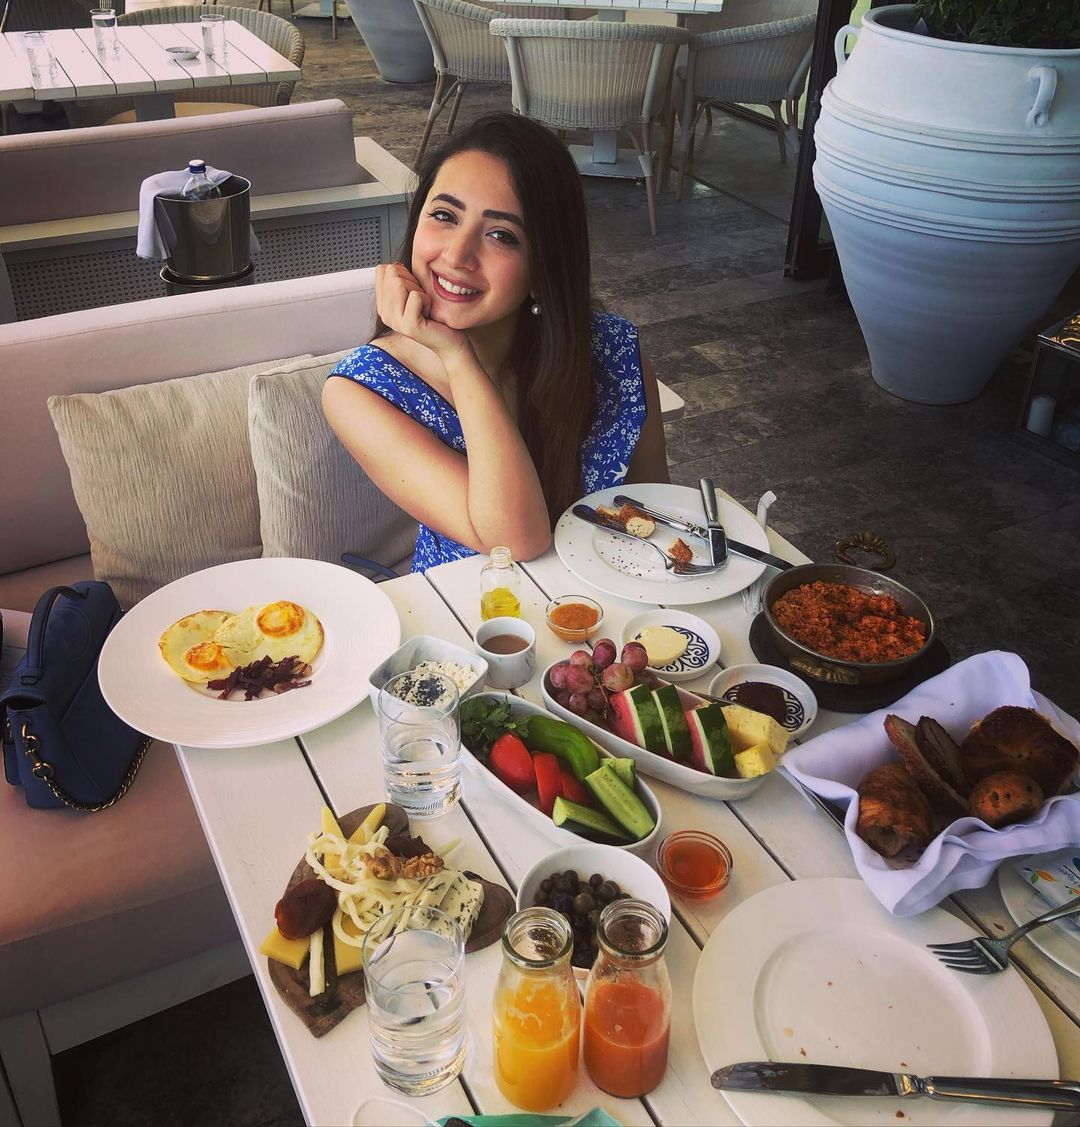 Pakistani Celebrities Enjoying Vacations in Turkey - Beautiful Pictures